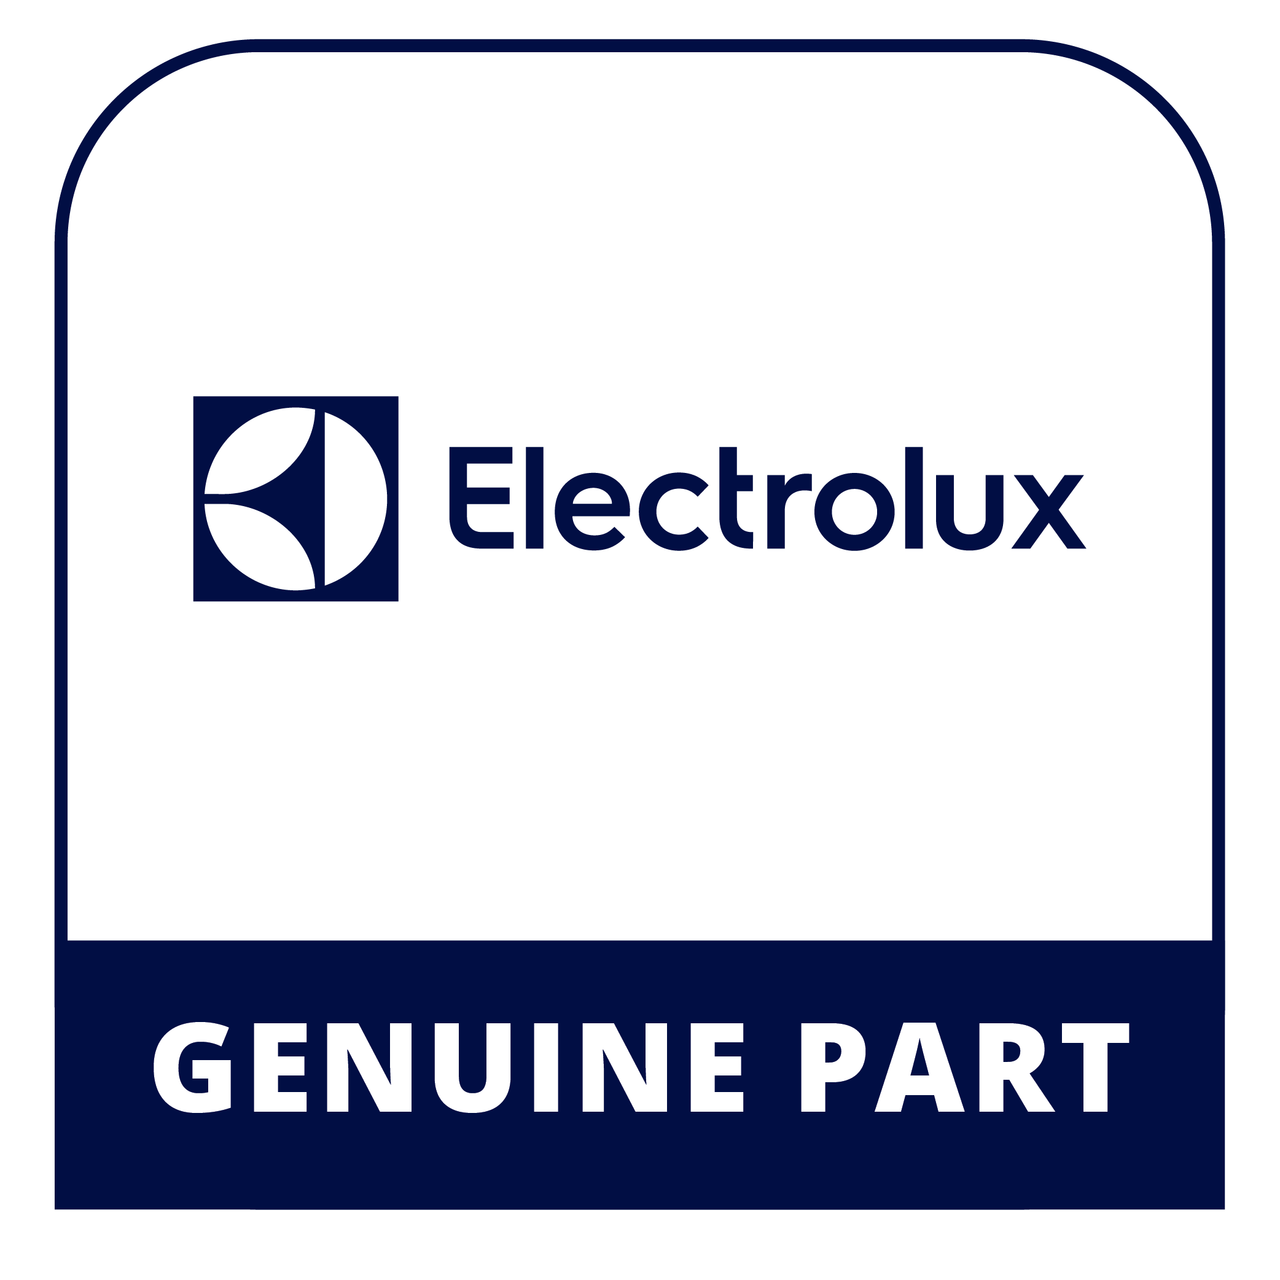 Frigidaire - Electrolux 5303209814 Nut - Genuine Electrolux Part